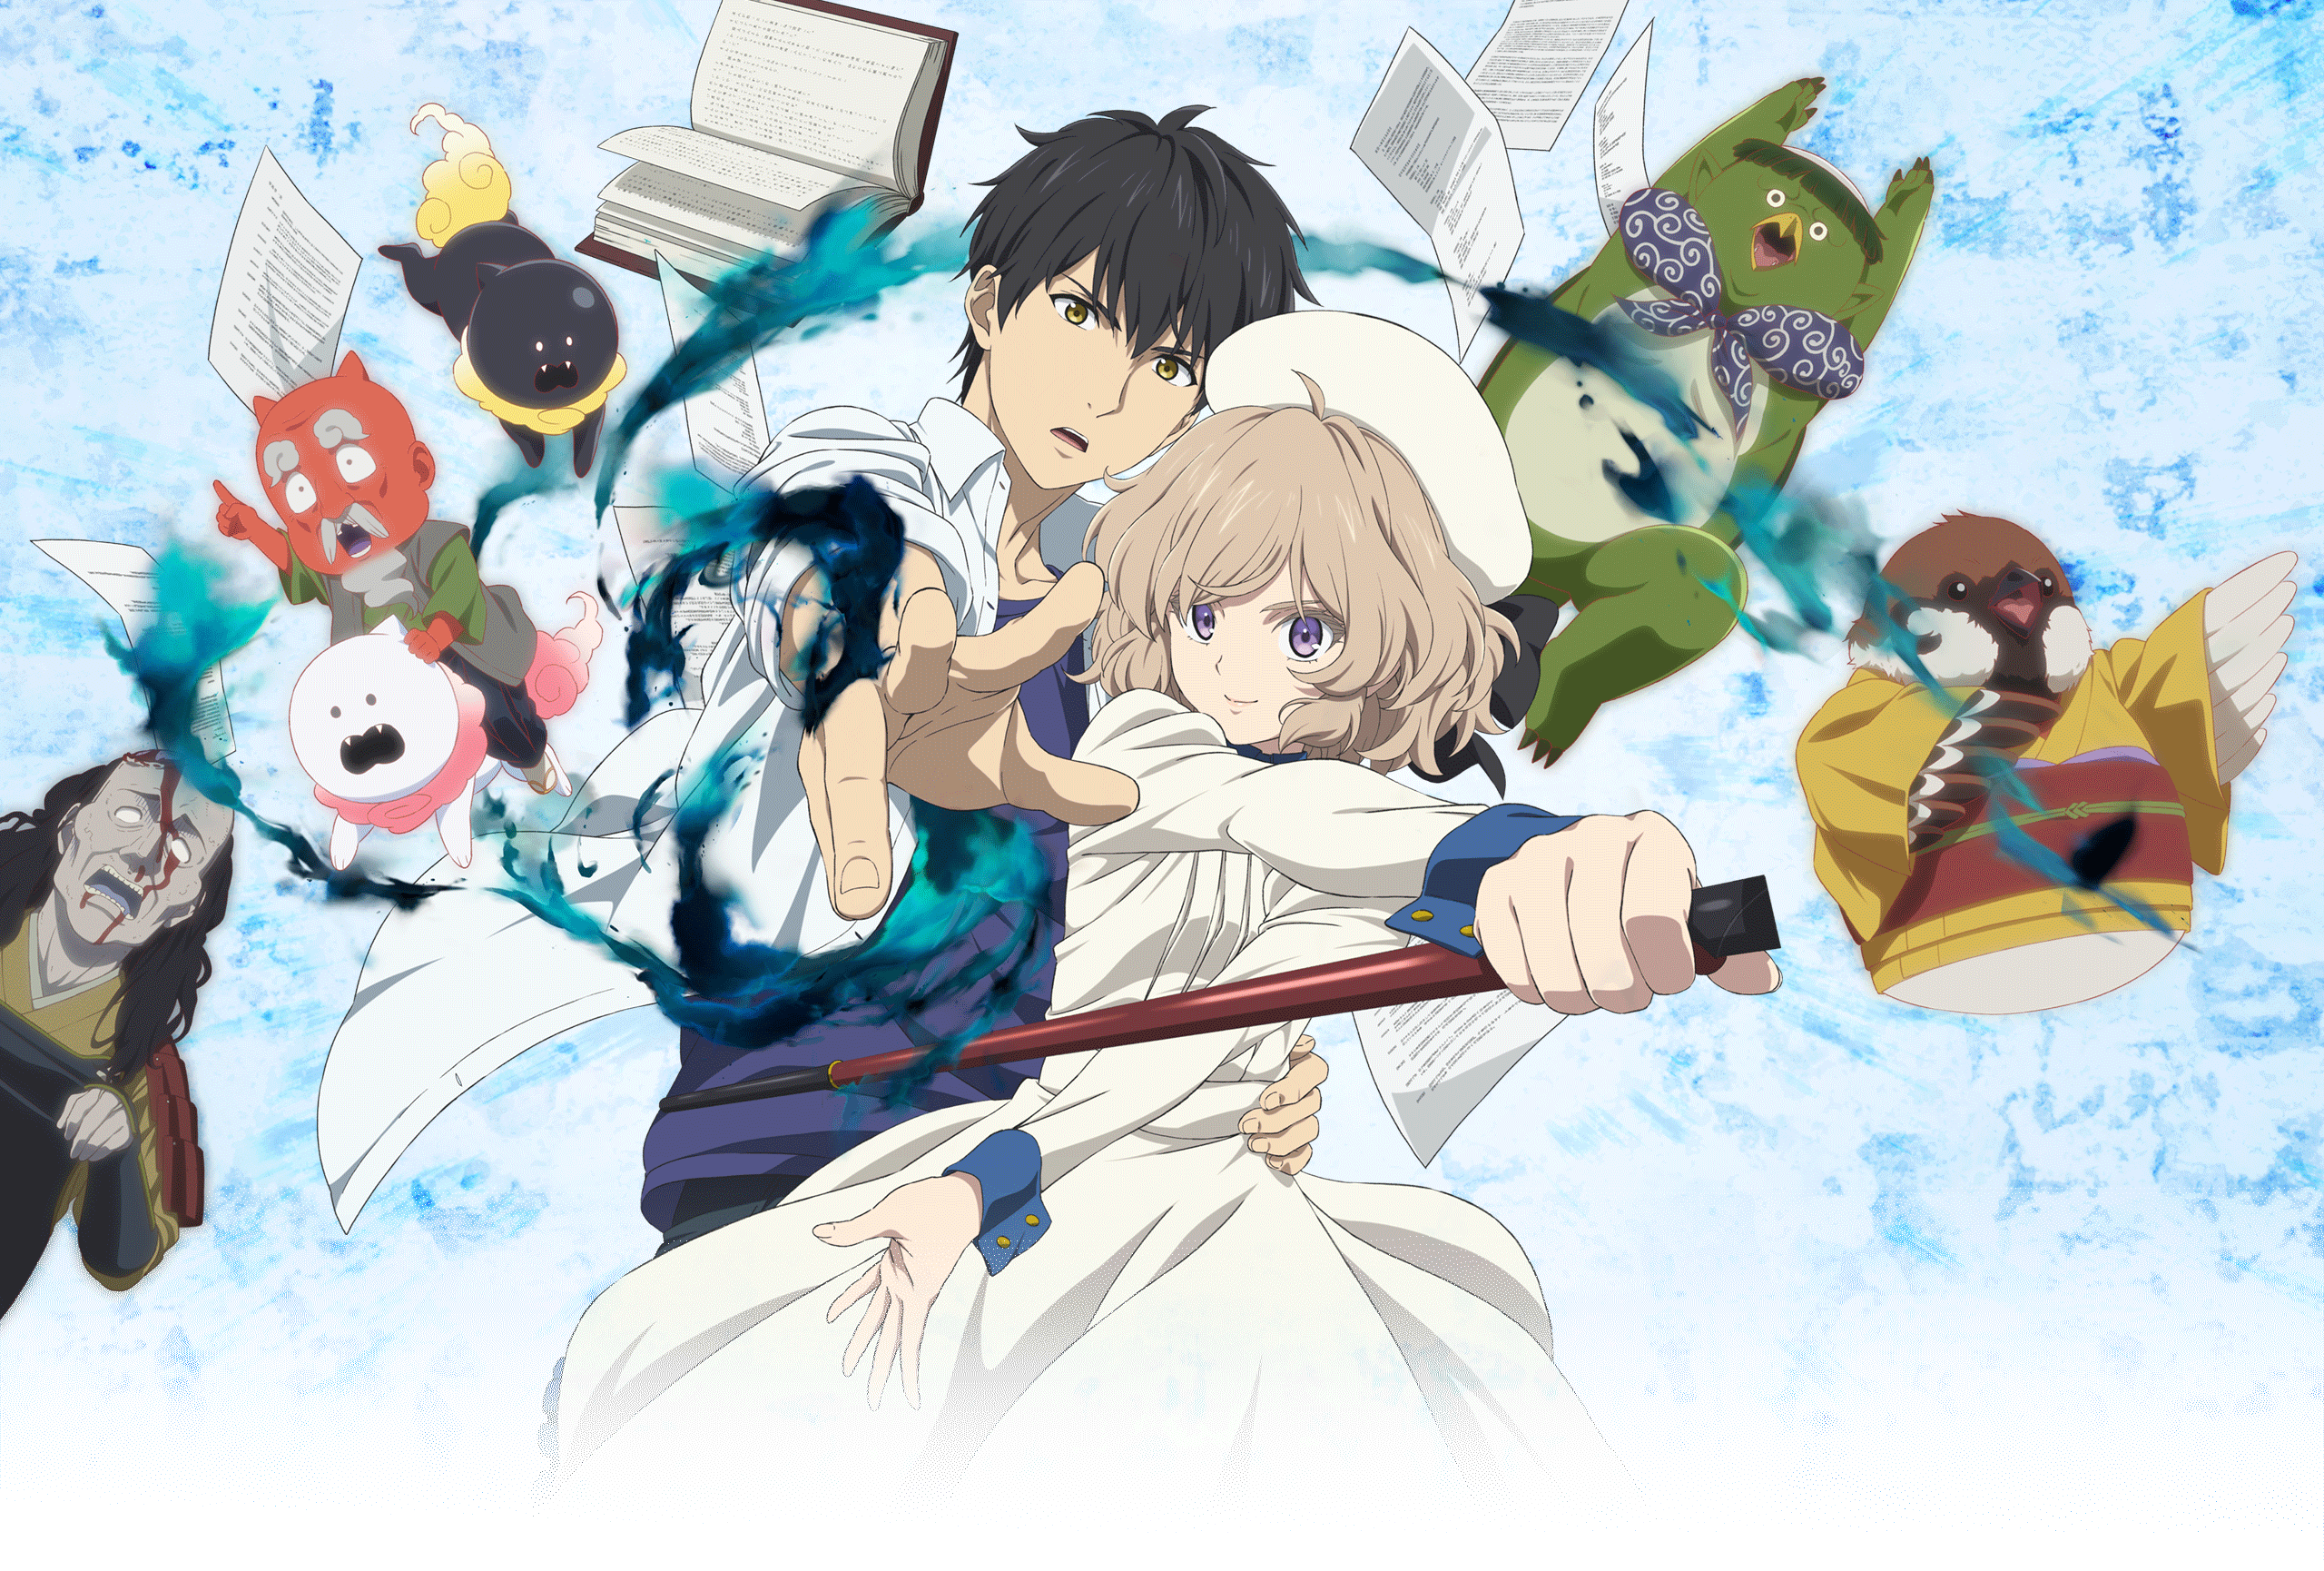 Kage no Jitsuryokusha ni Naritakute！ 2nd season」Ep.2 Preview ≪Normal Ver.≫  : r/anime